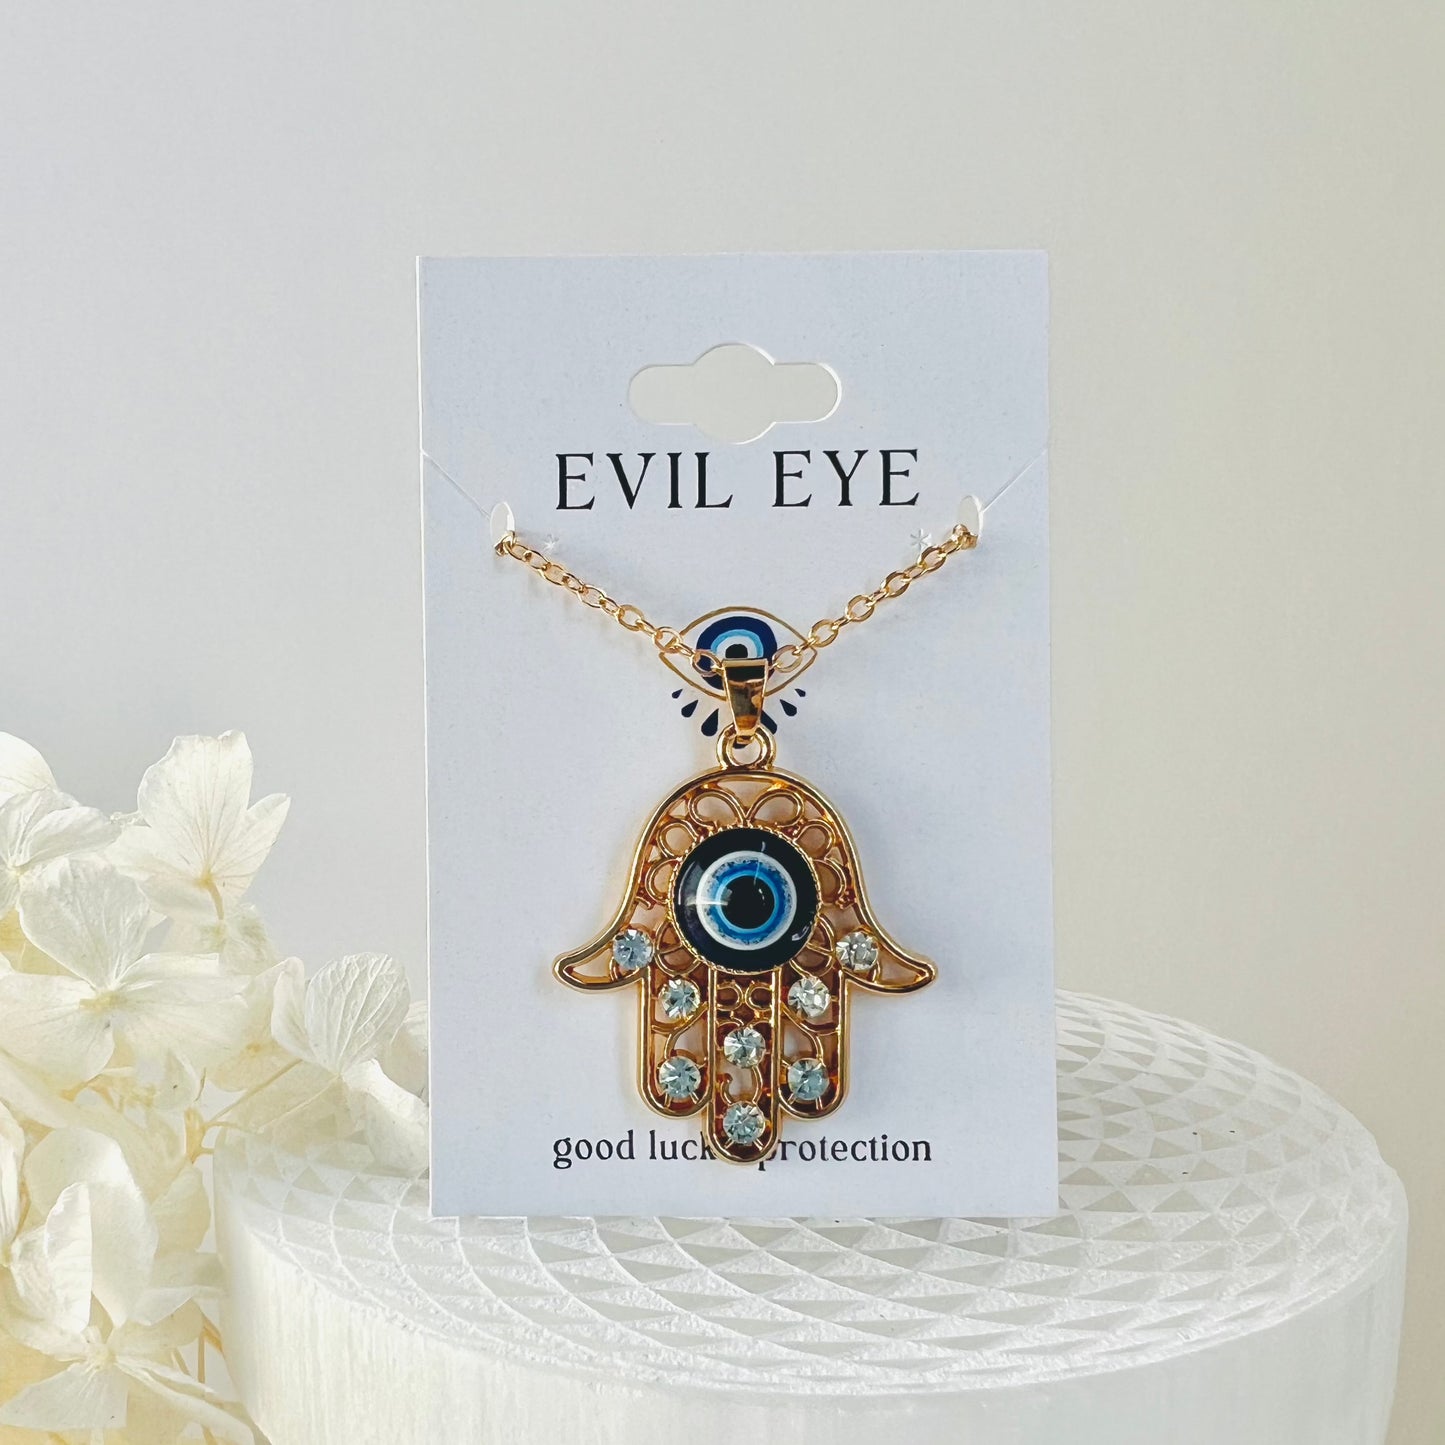 N6&7-Evil Eye & Rhinestone Pendant Necklace- Jewelry  from Shein